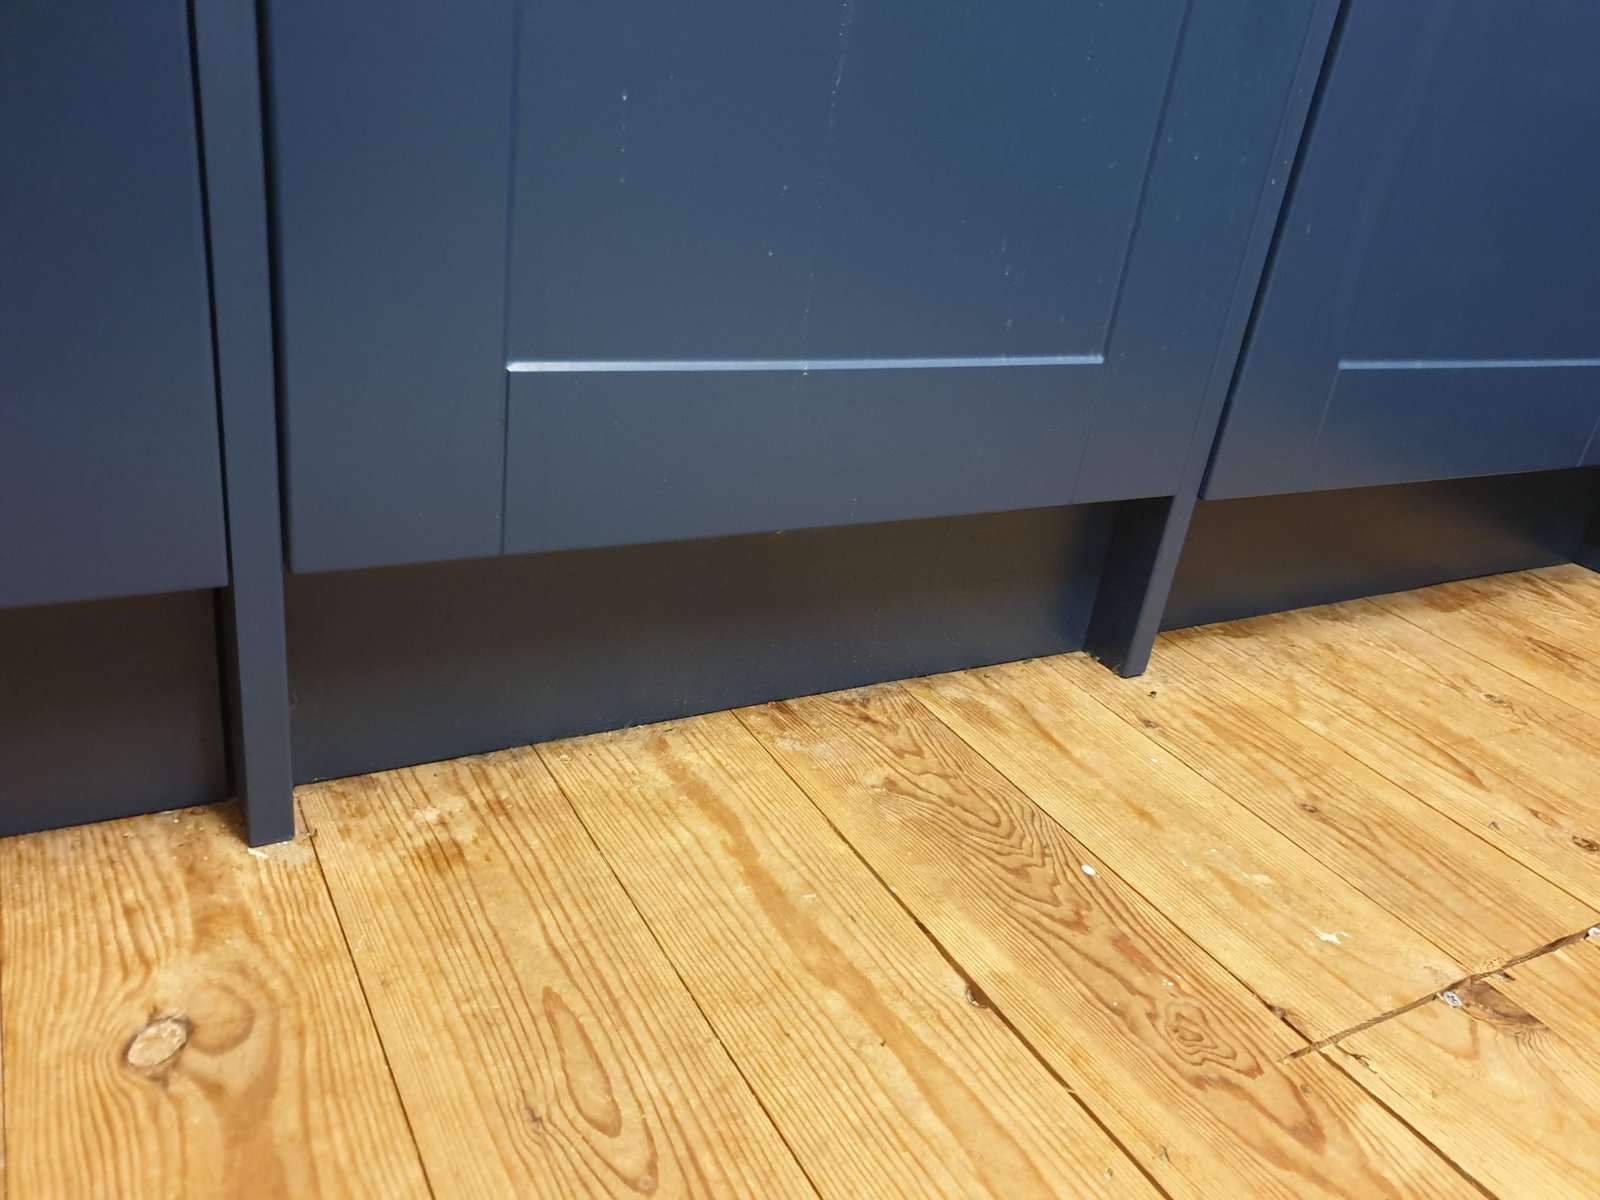 Laminate Under Kitchen Units Diynot, Installing Laminate Flooring In Kitchen Under The Cabinets